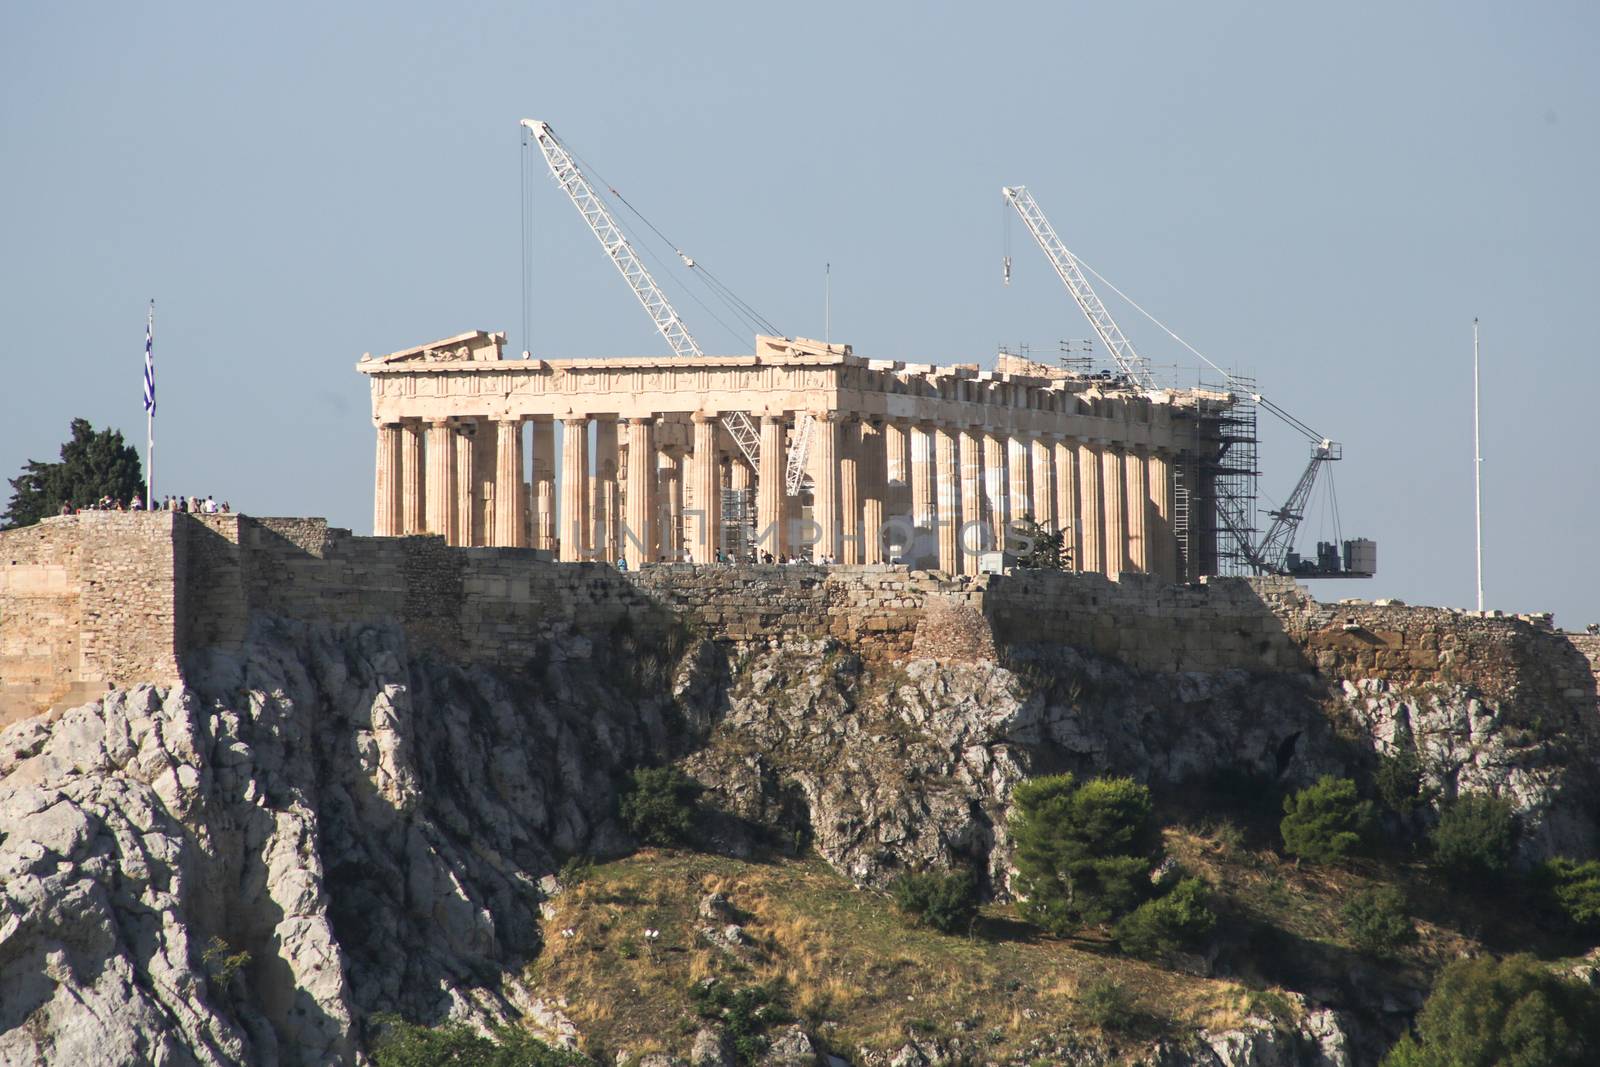 View on the Acropolis by Kartouchken